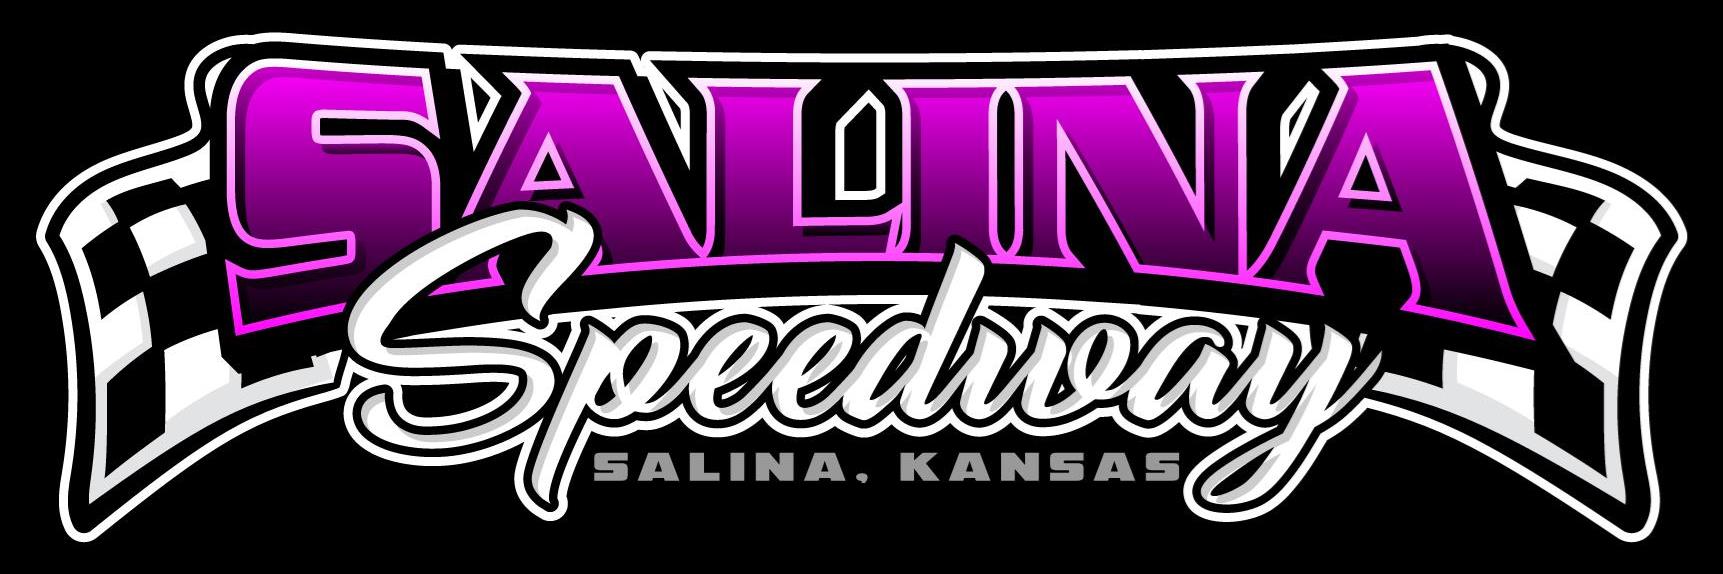 4/30/2021 - Salina Speedway